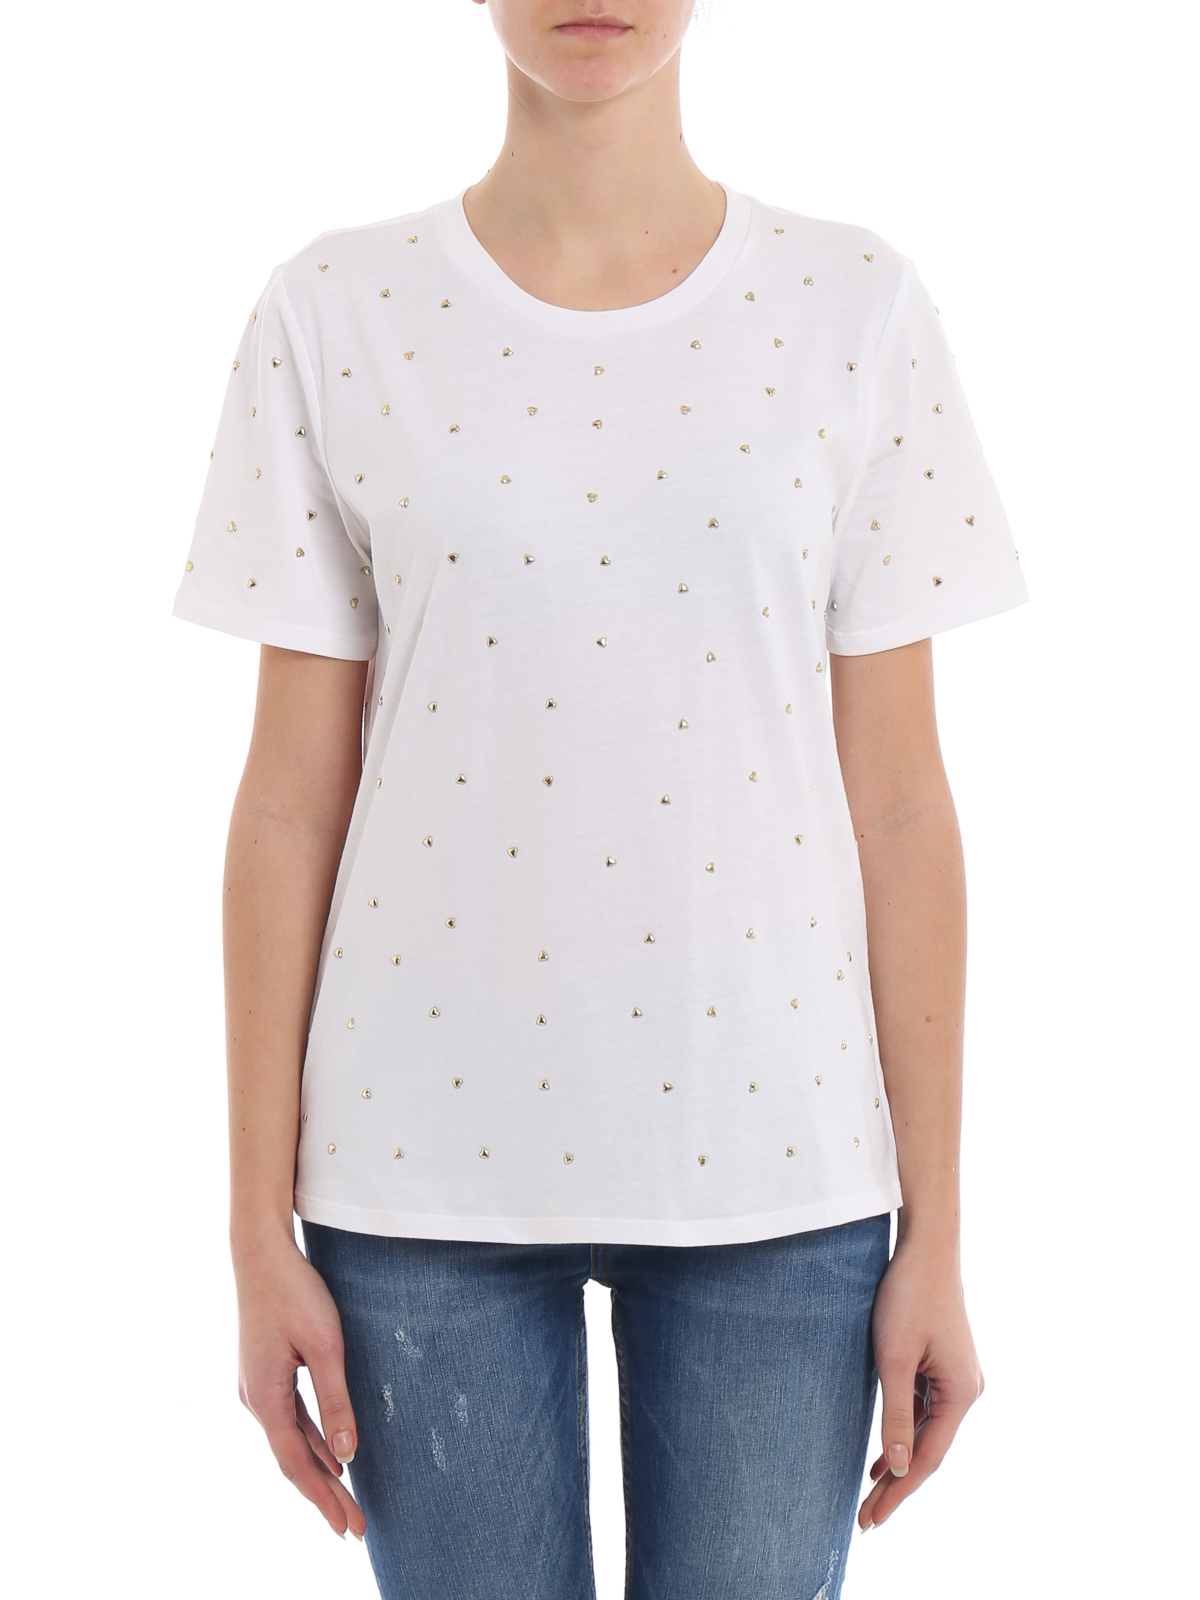 T-shirts Michael Kors - Heart studded white cotton T-shirt 